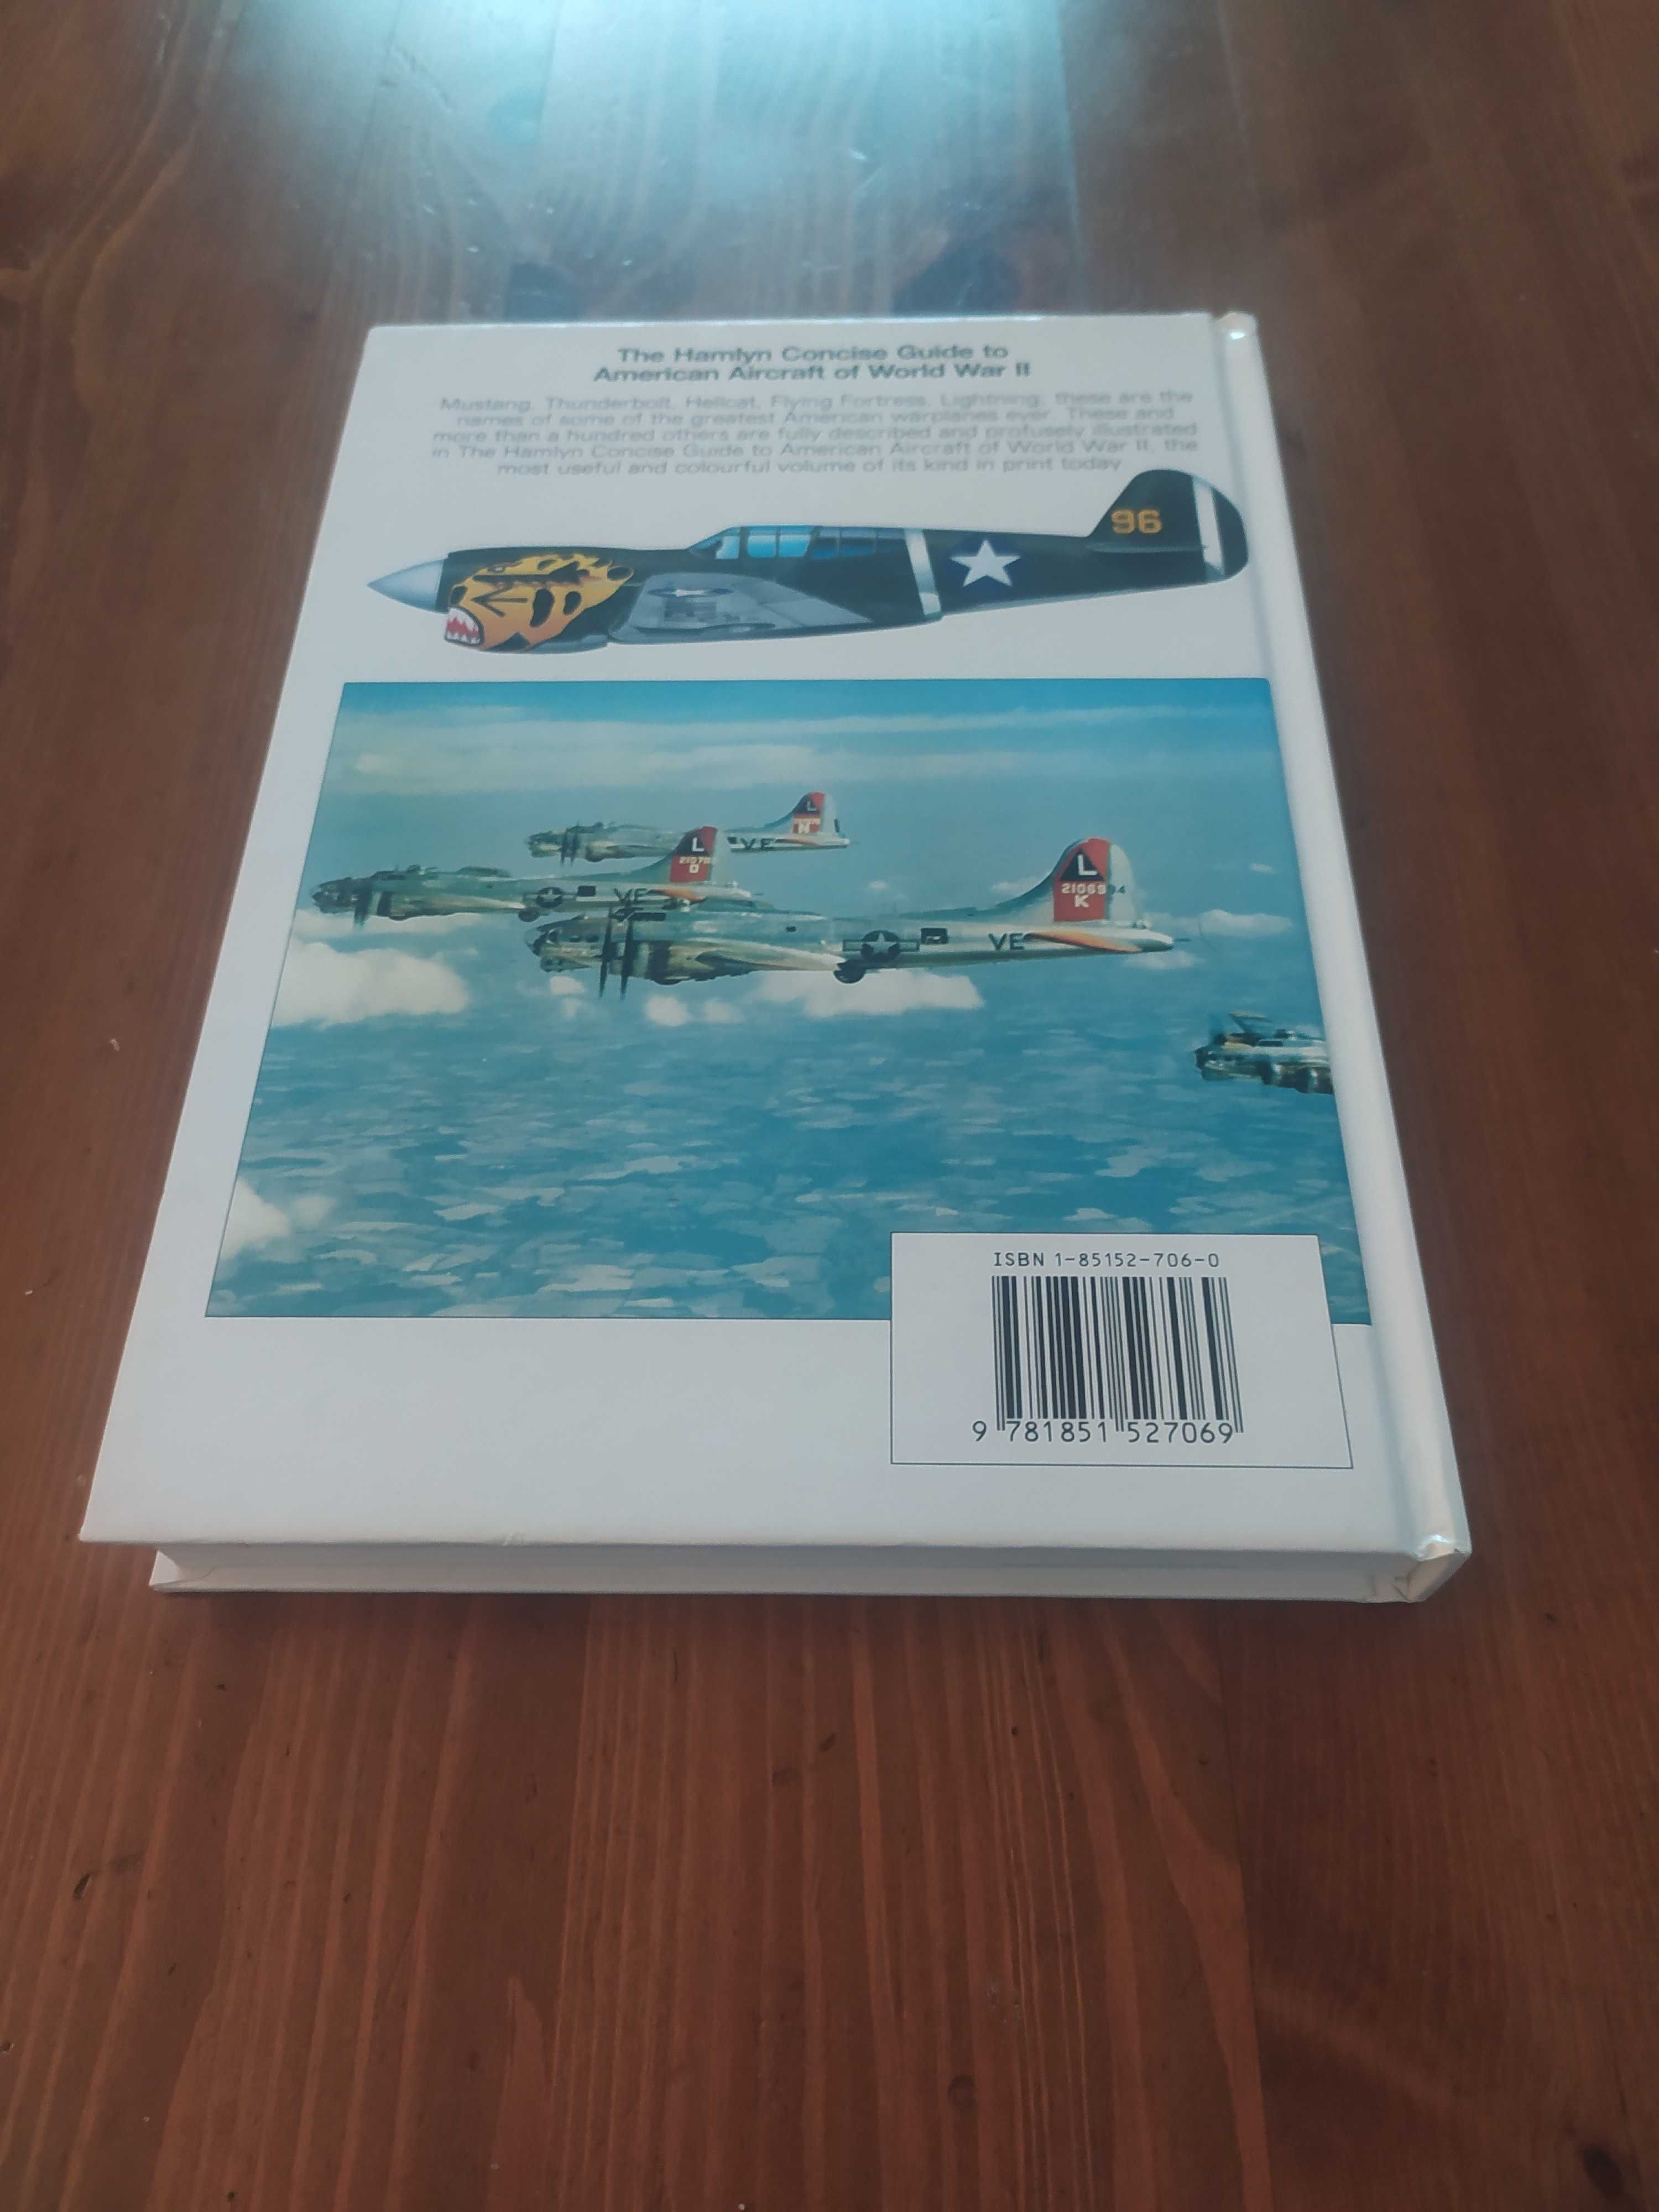 Livro American Aircraft of World War II